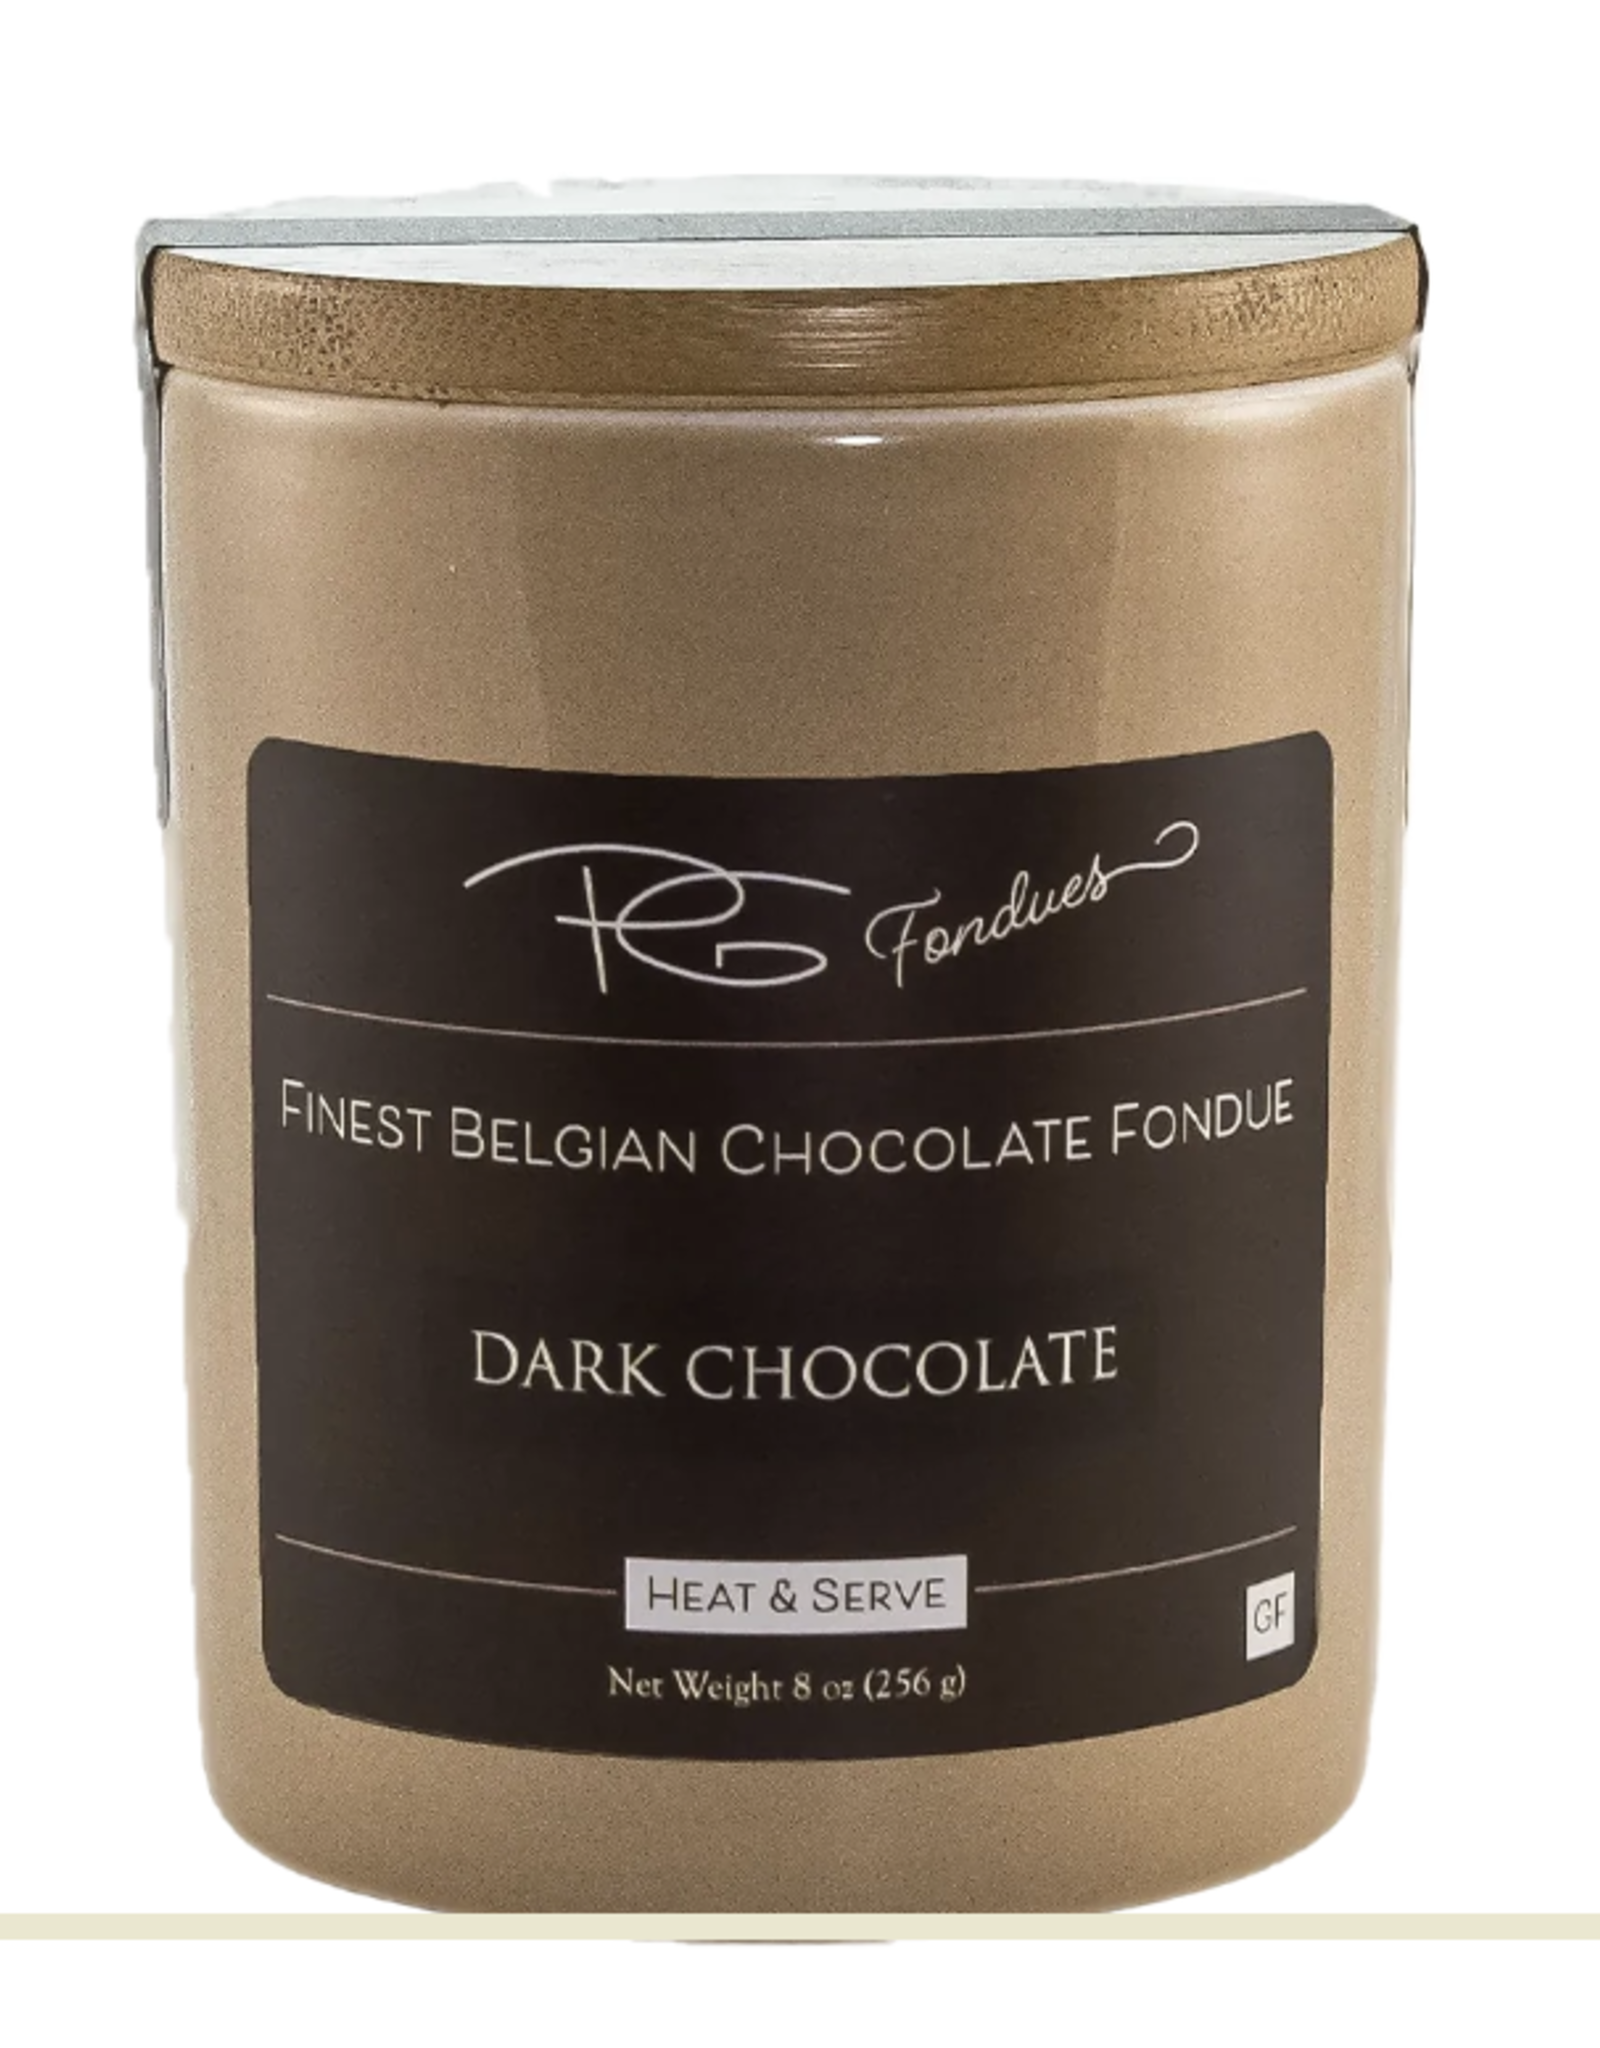 PG Fondues Belgian Dark Chocolate Fondue